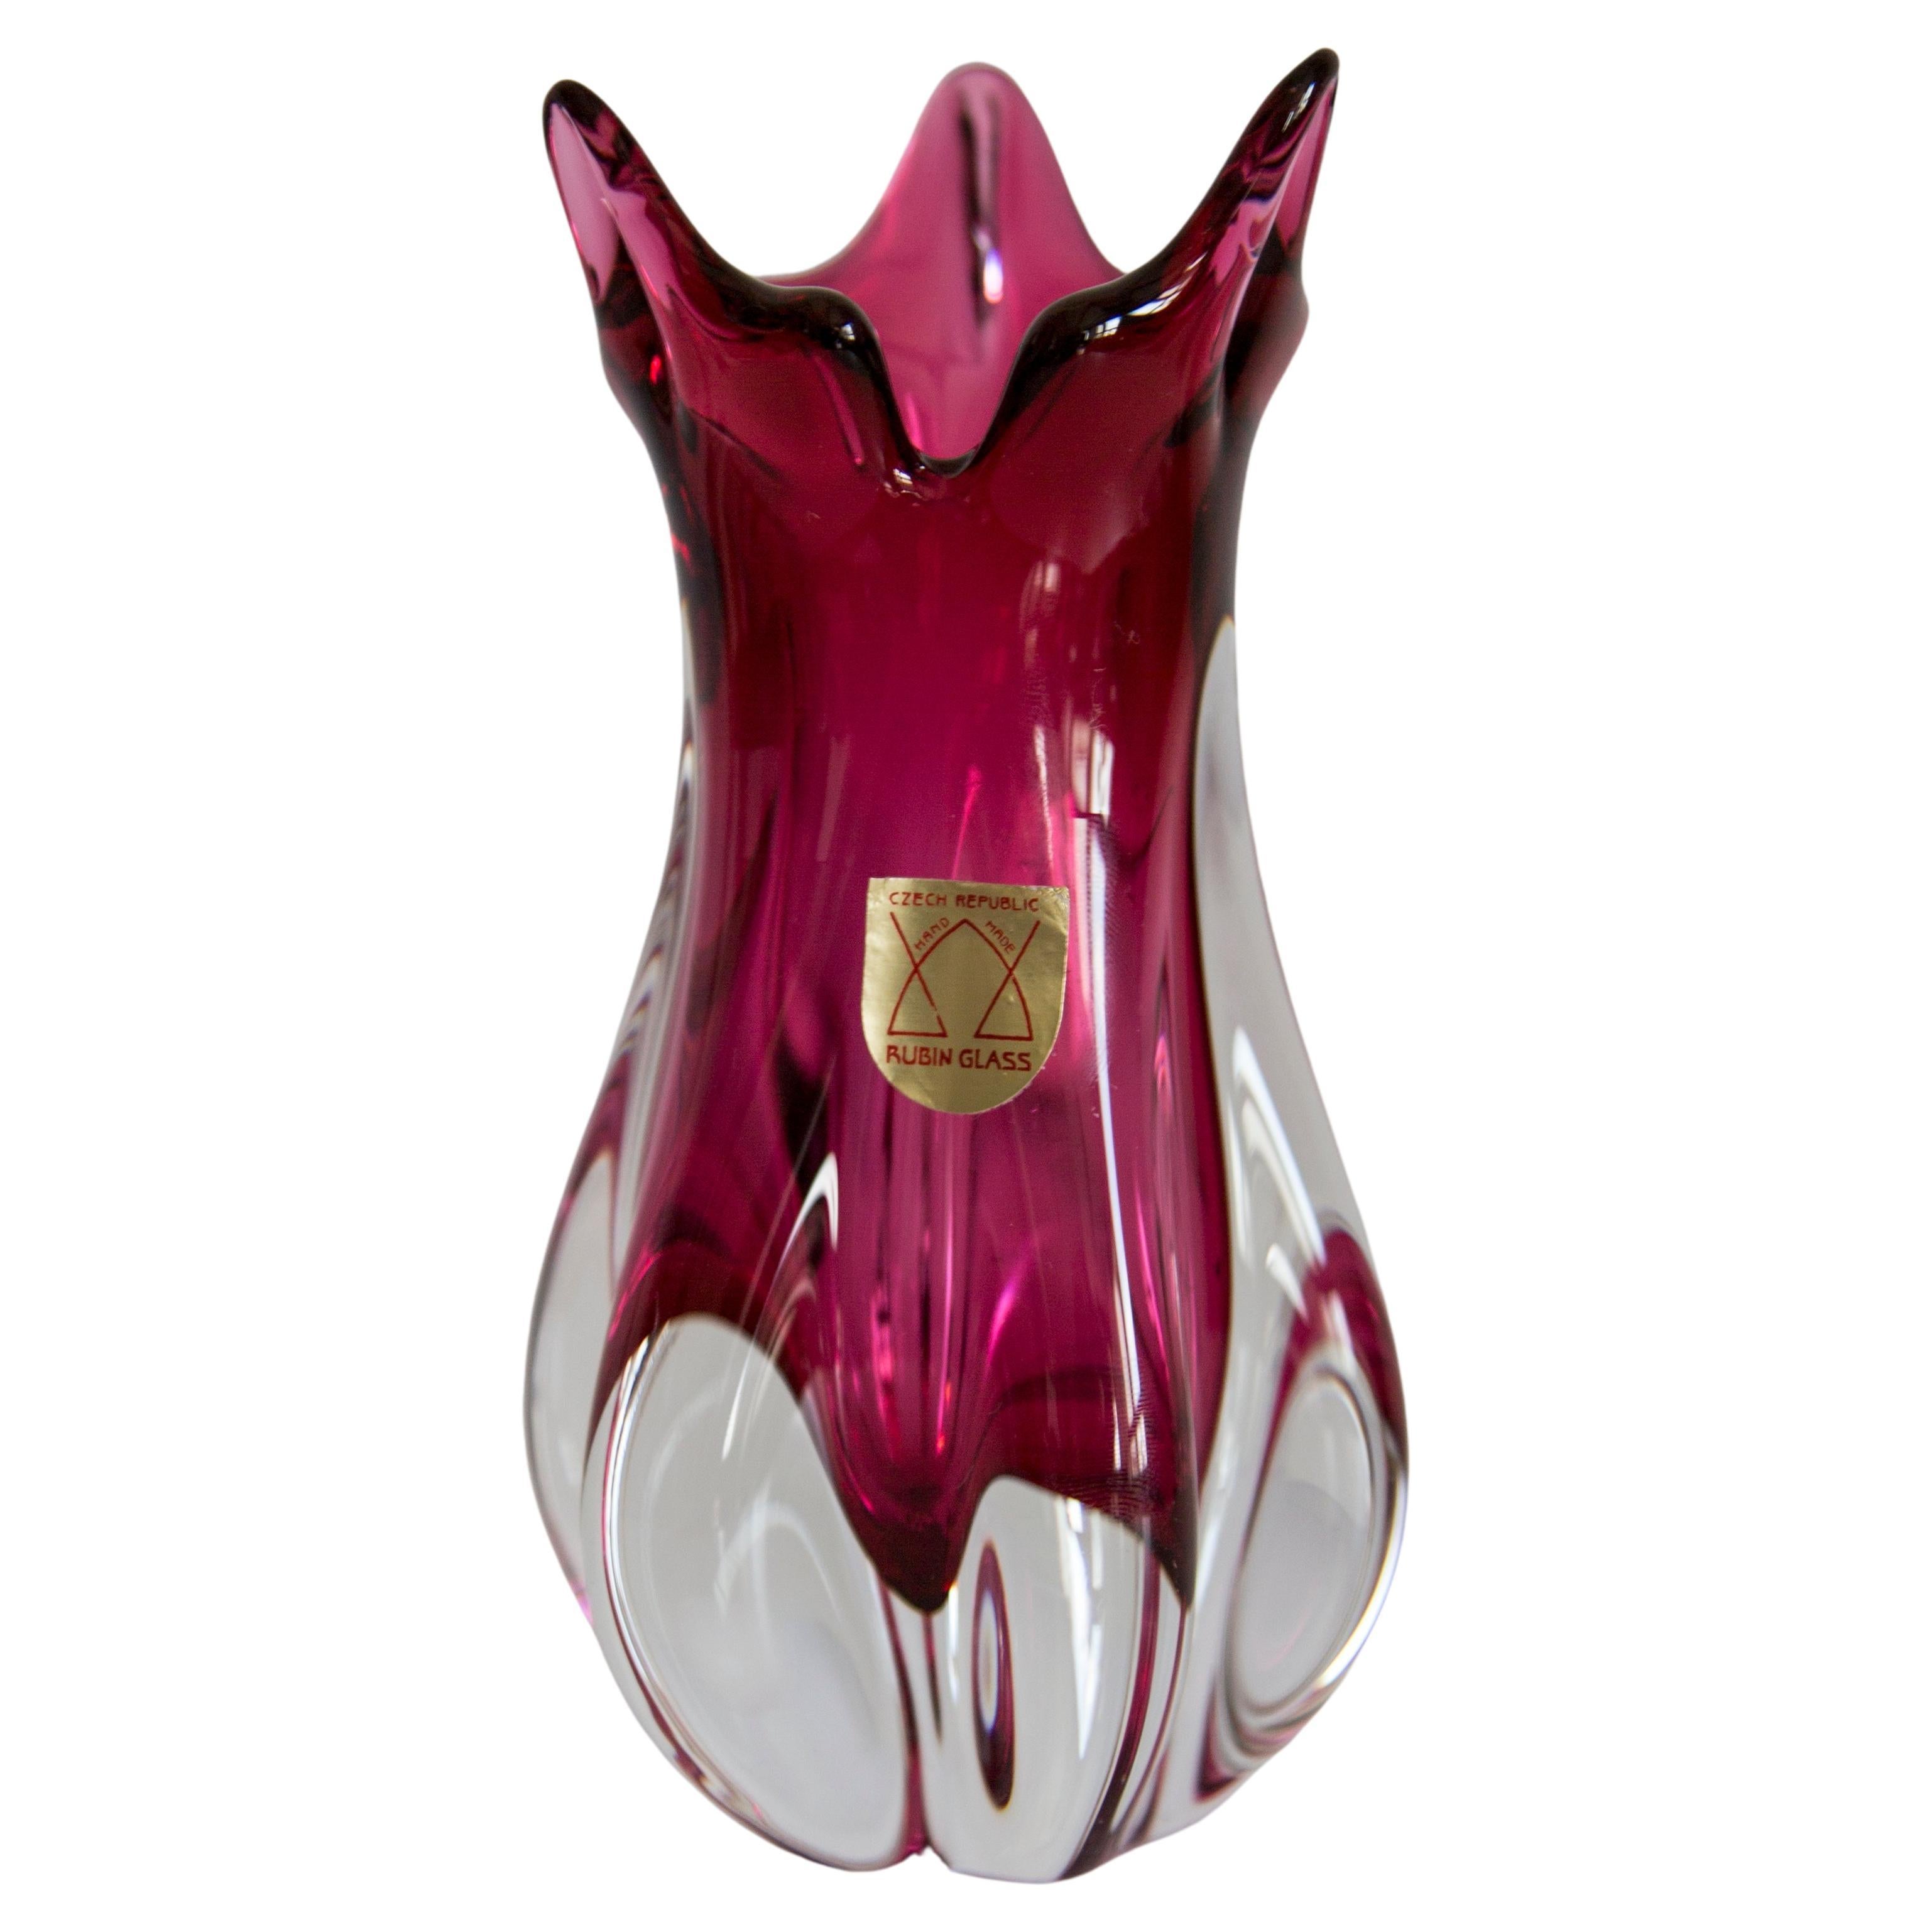 Mid Century Crystal Pink Glass Artistic Vase, Rubin Glass, Czech Republic, 1970s For Sale